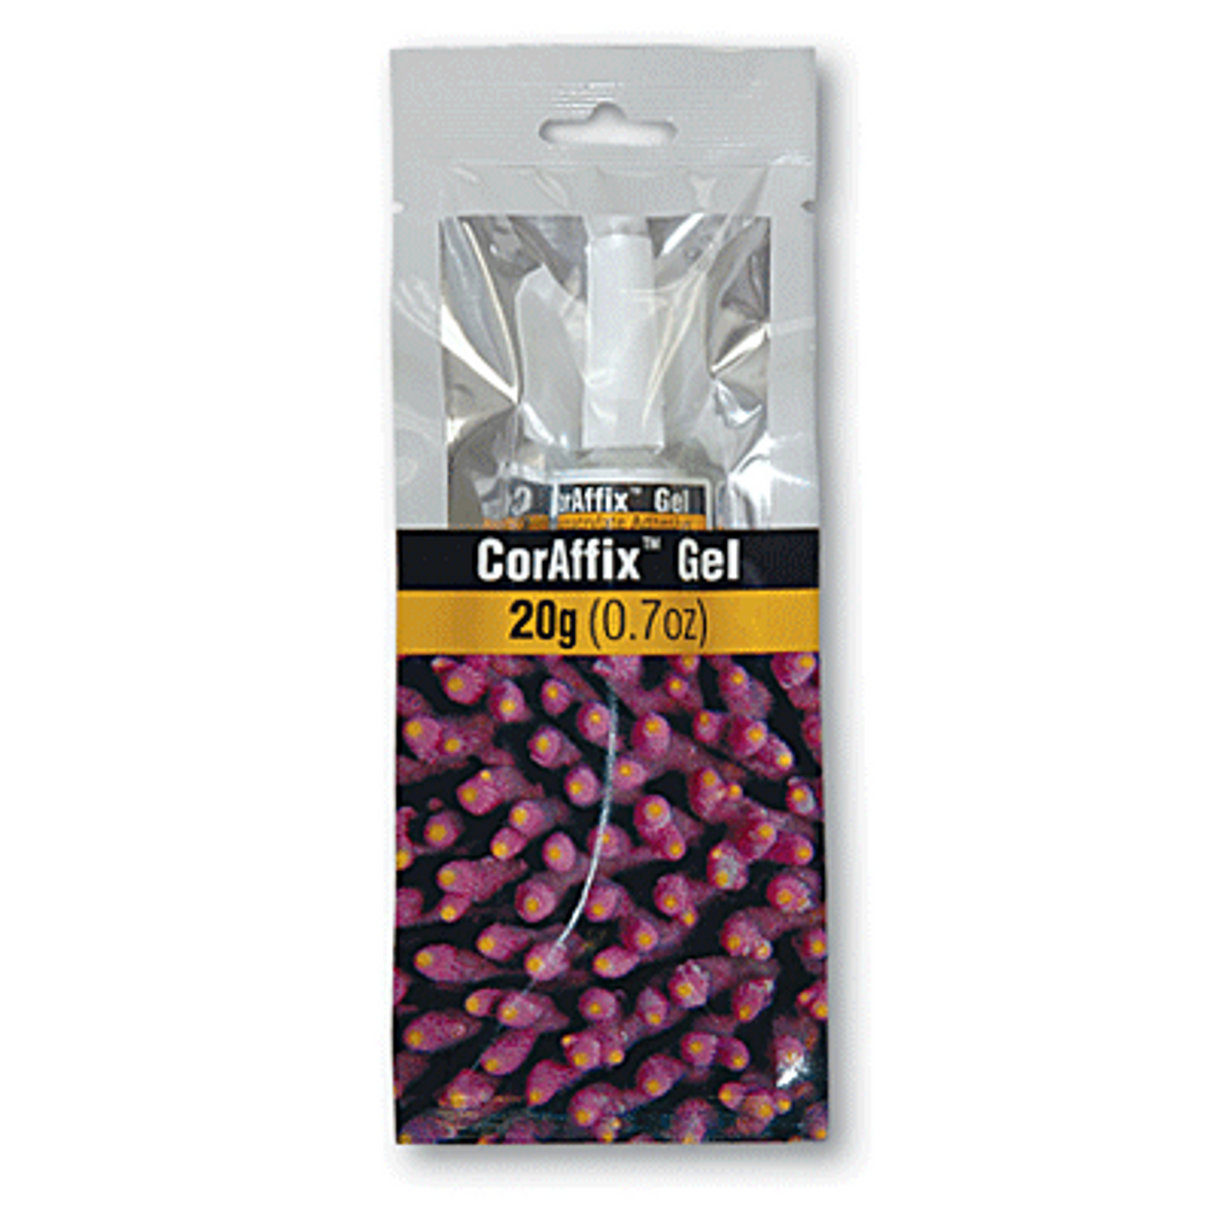 CorAffix Gel 20g - Two Little Fishies